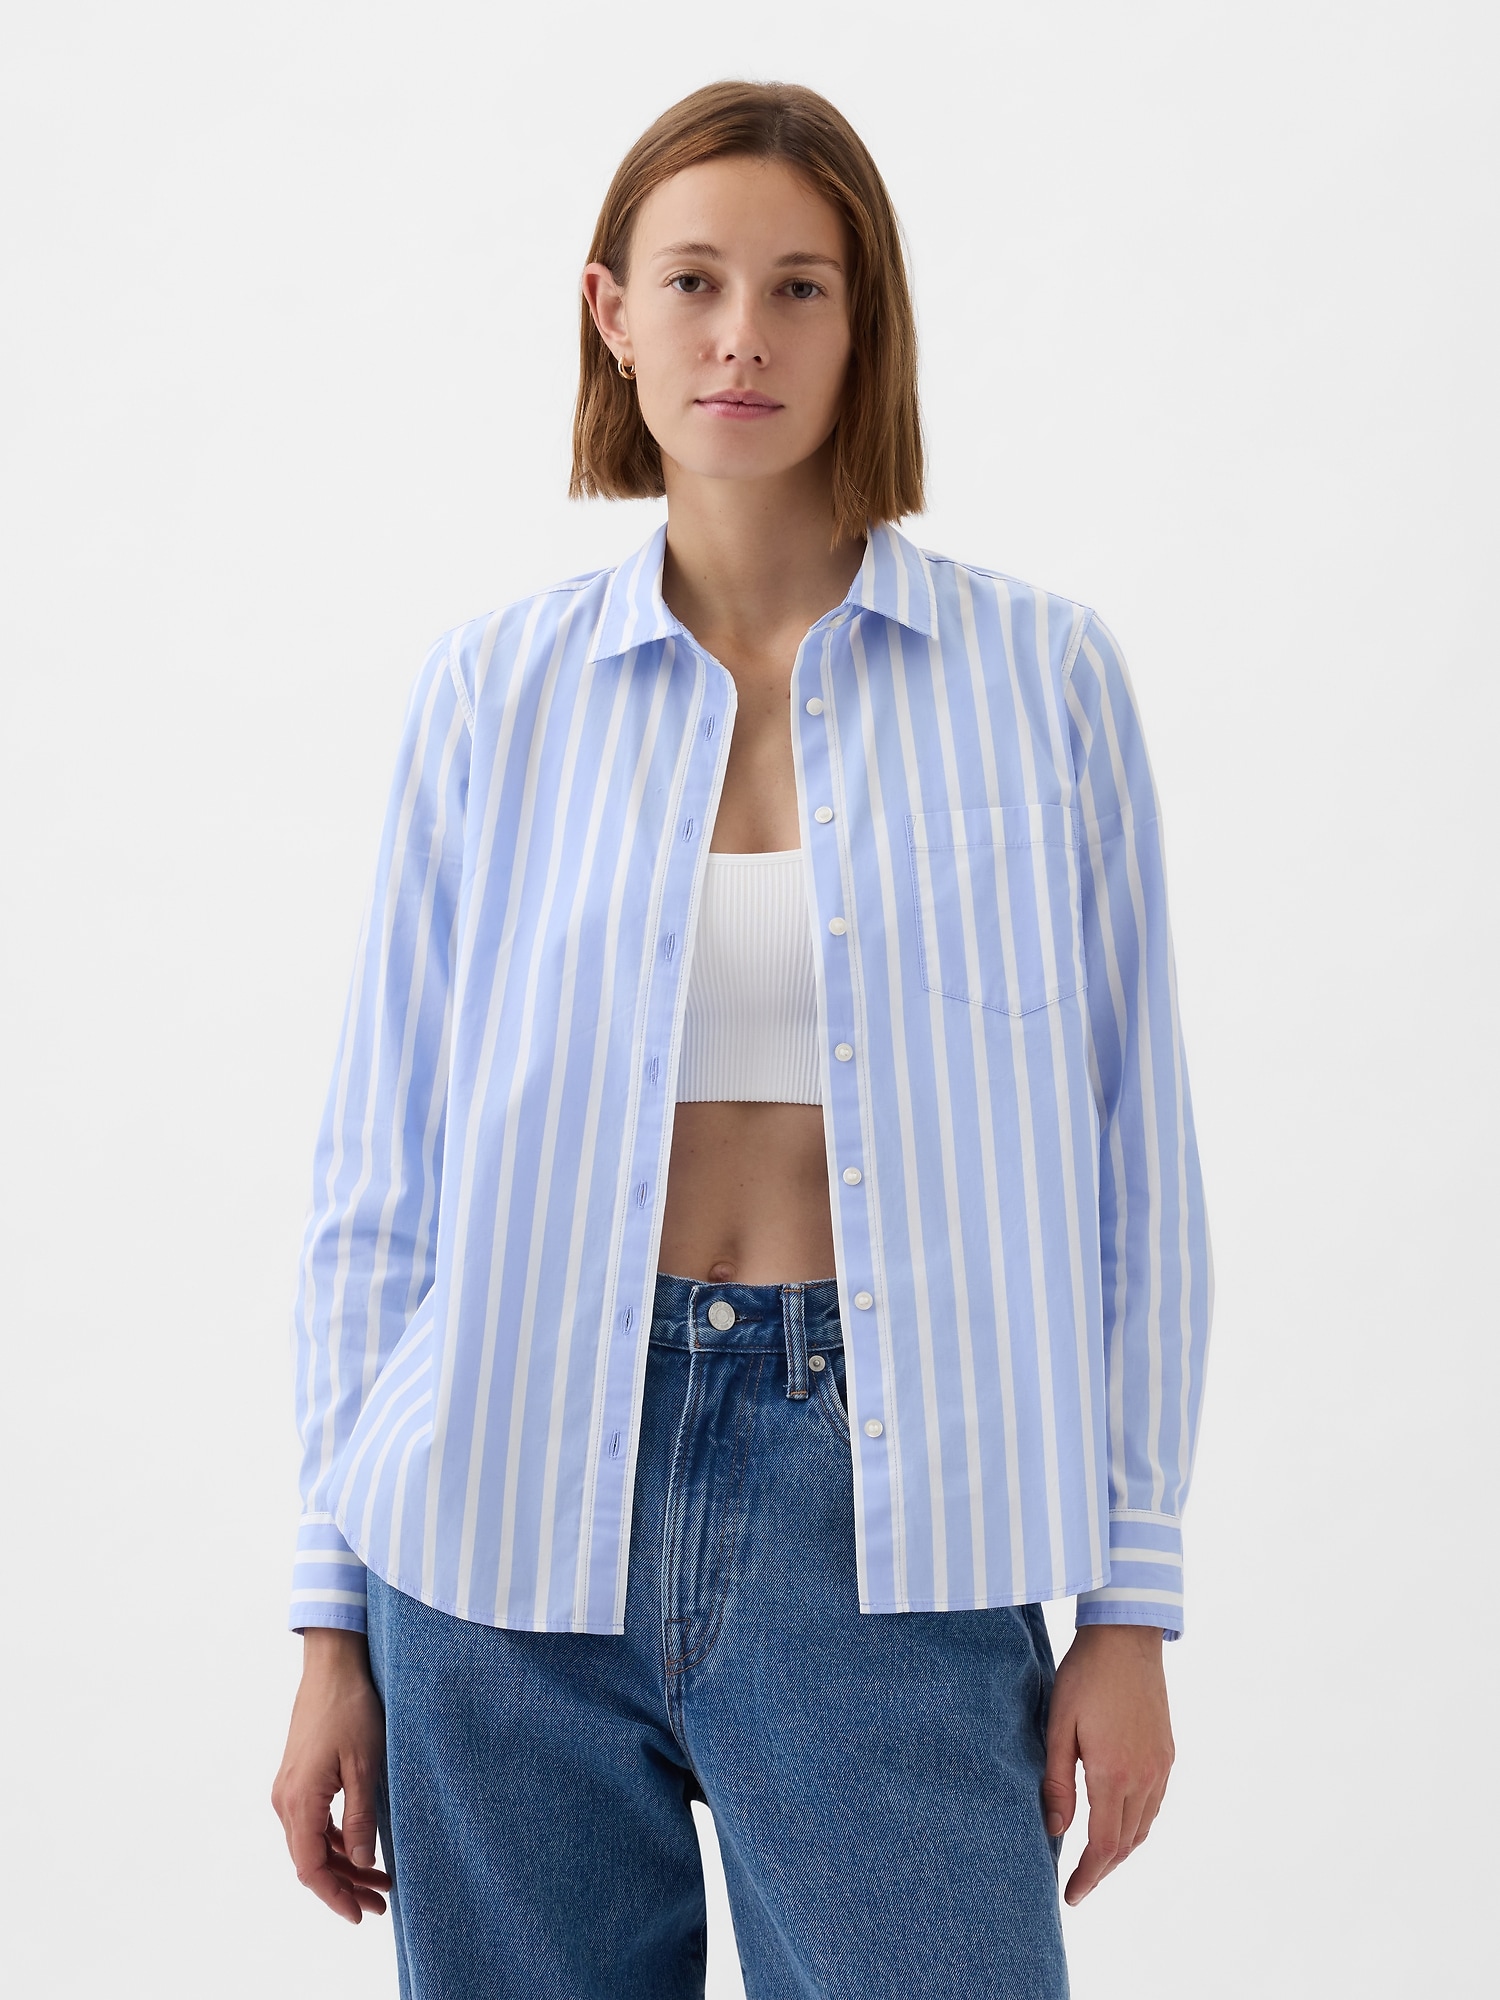 Gap Organic Cotton Perfect Shirt In Light Blue & White Stripe